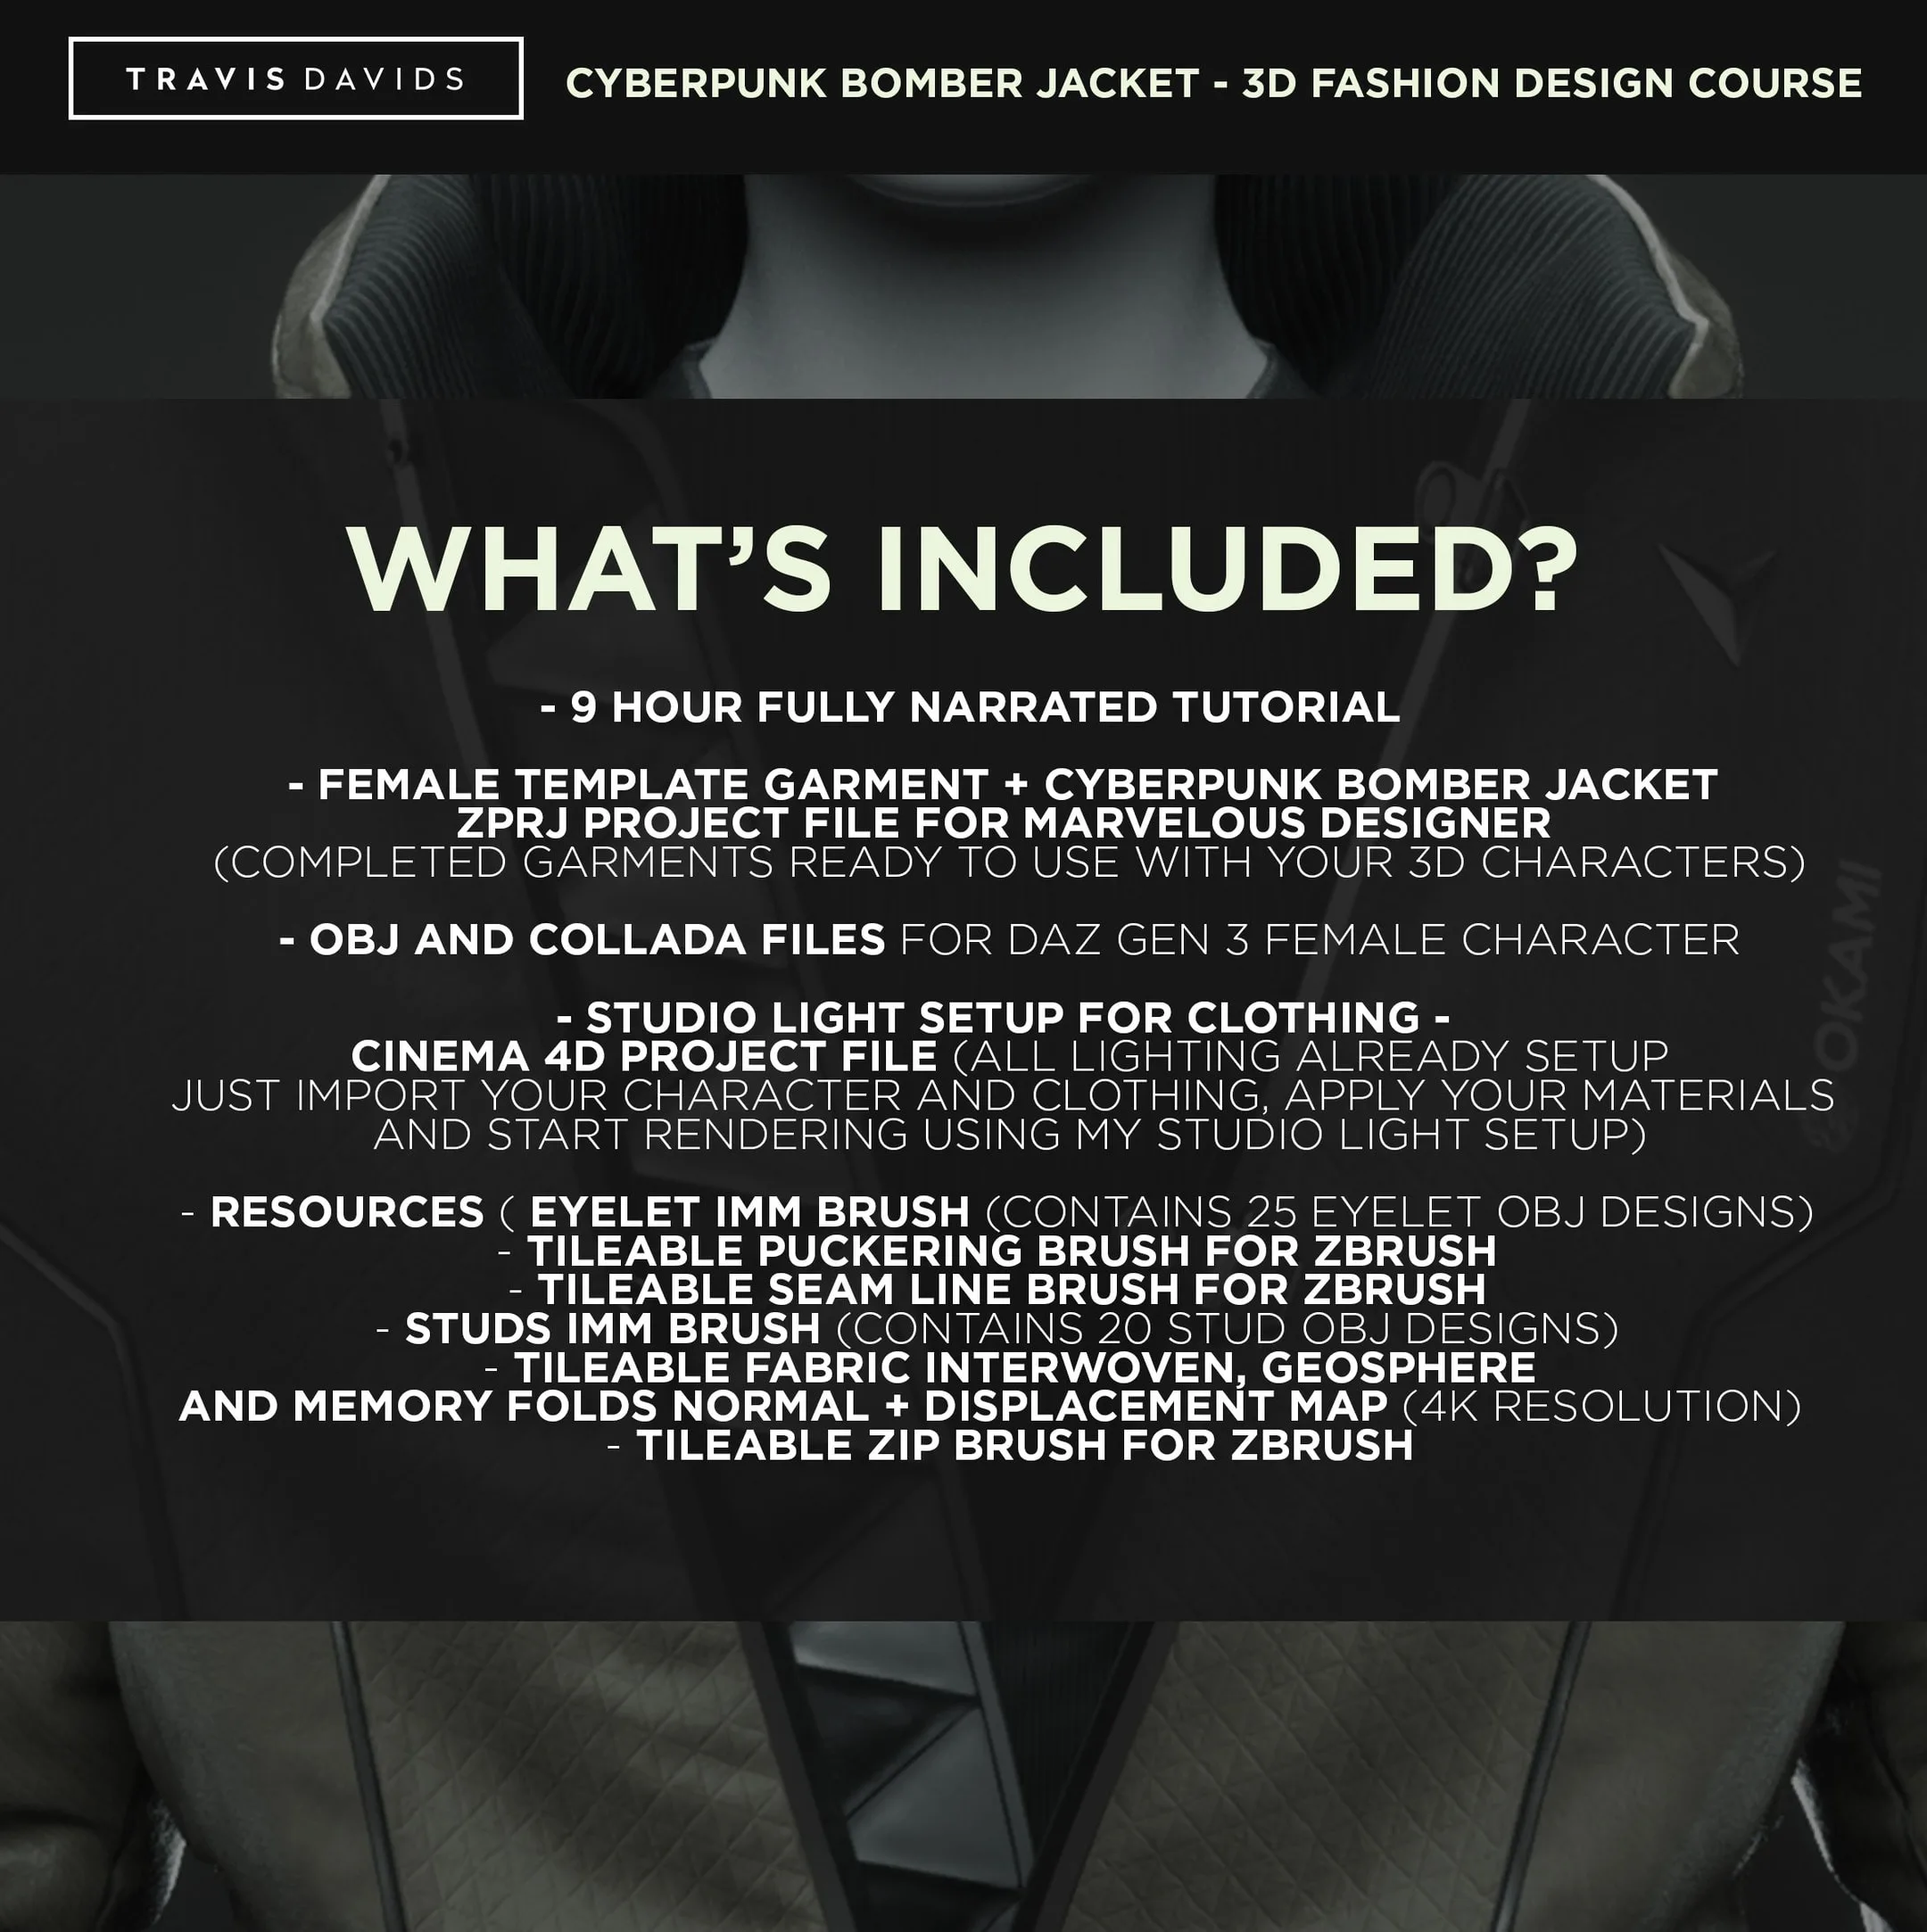 Cyberpunk Bomber Jacket - 3D Fashion Design Course